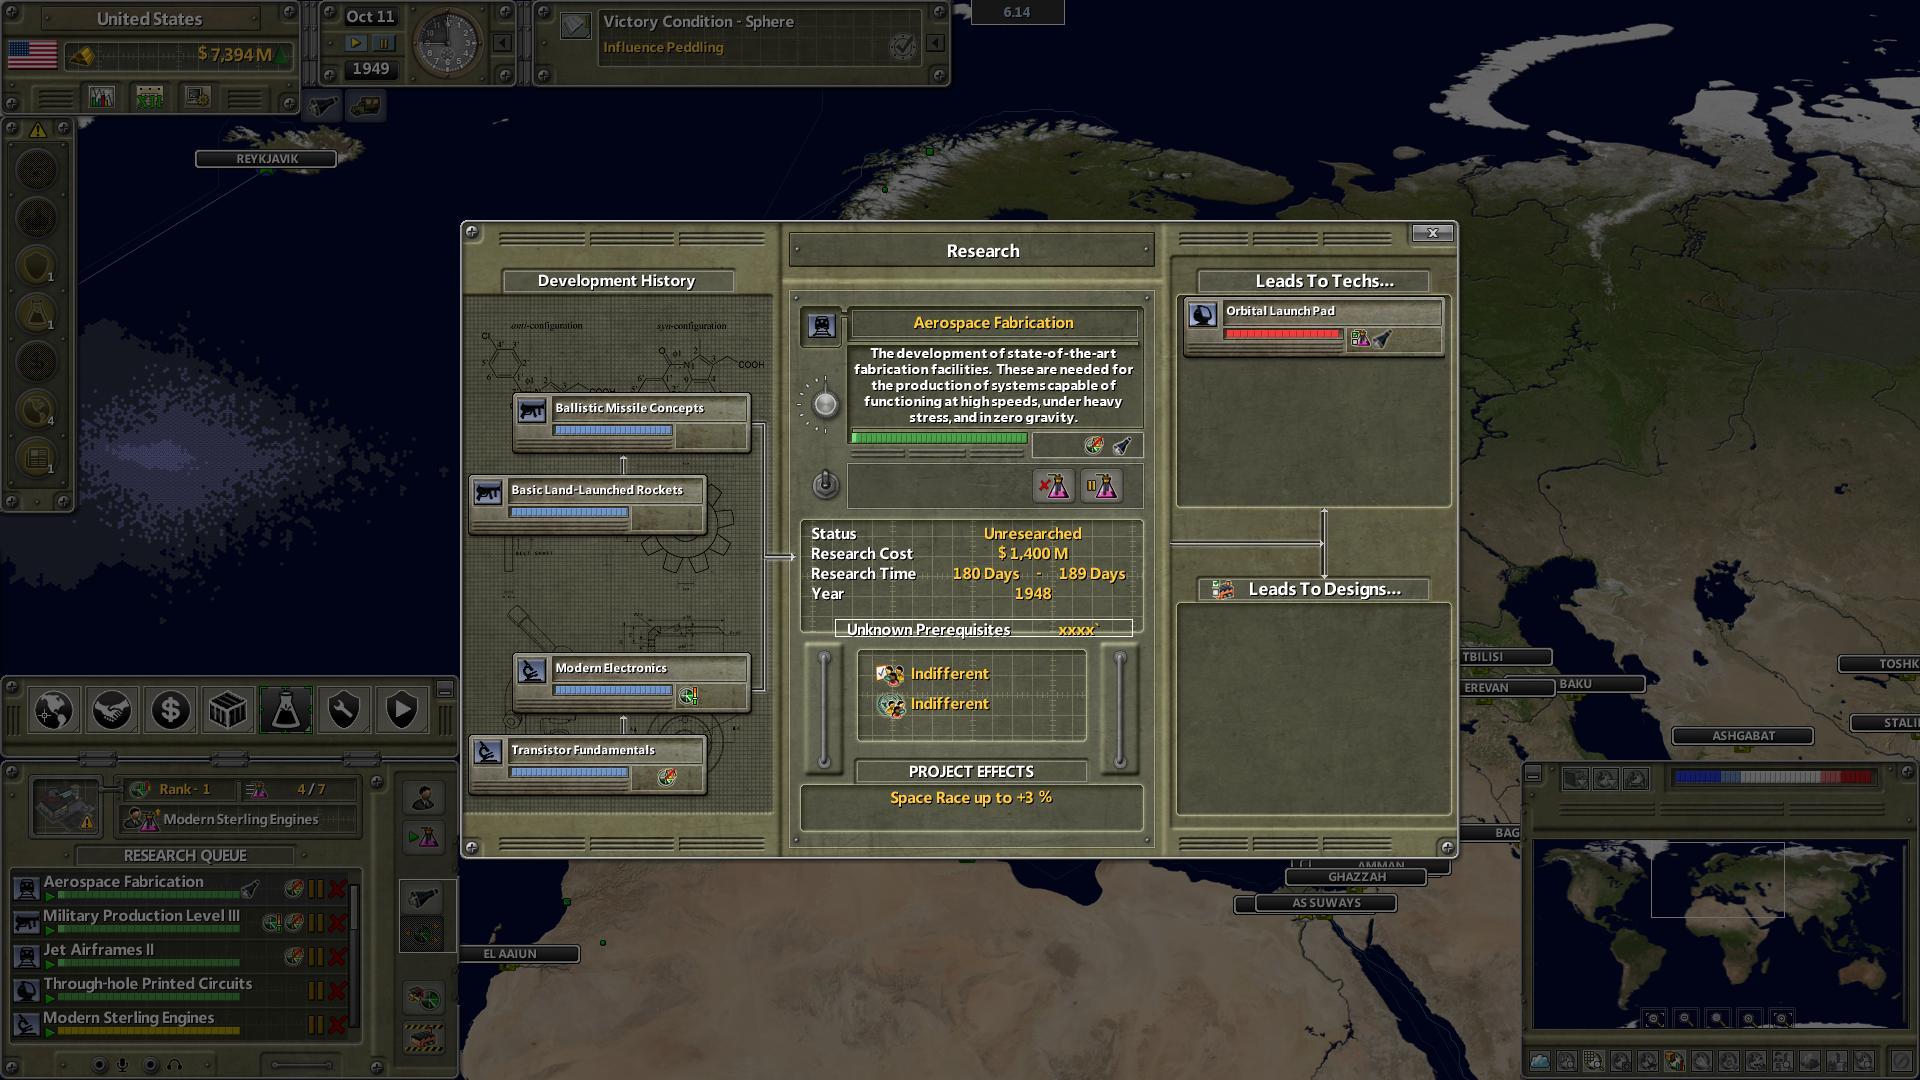 Screenshot №2 from game Supreme Ruler Ultimate